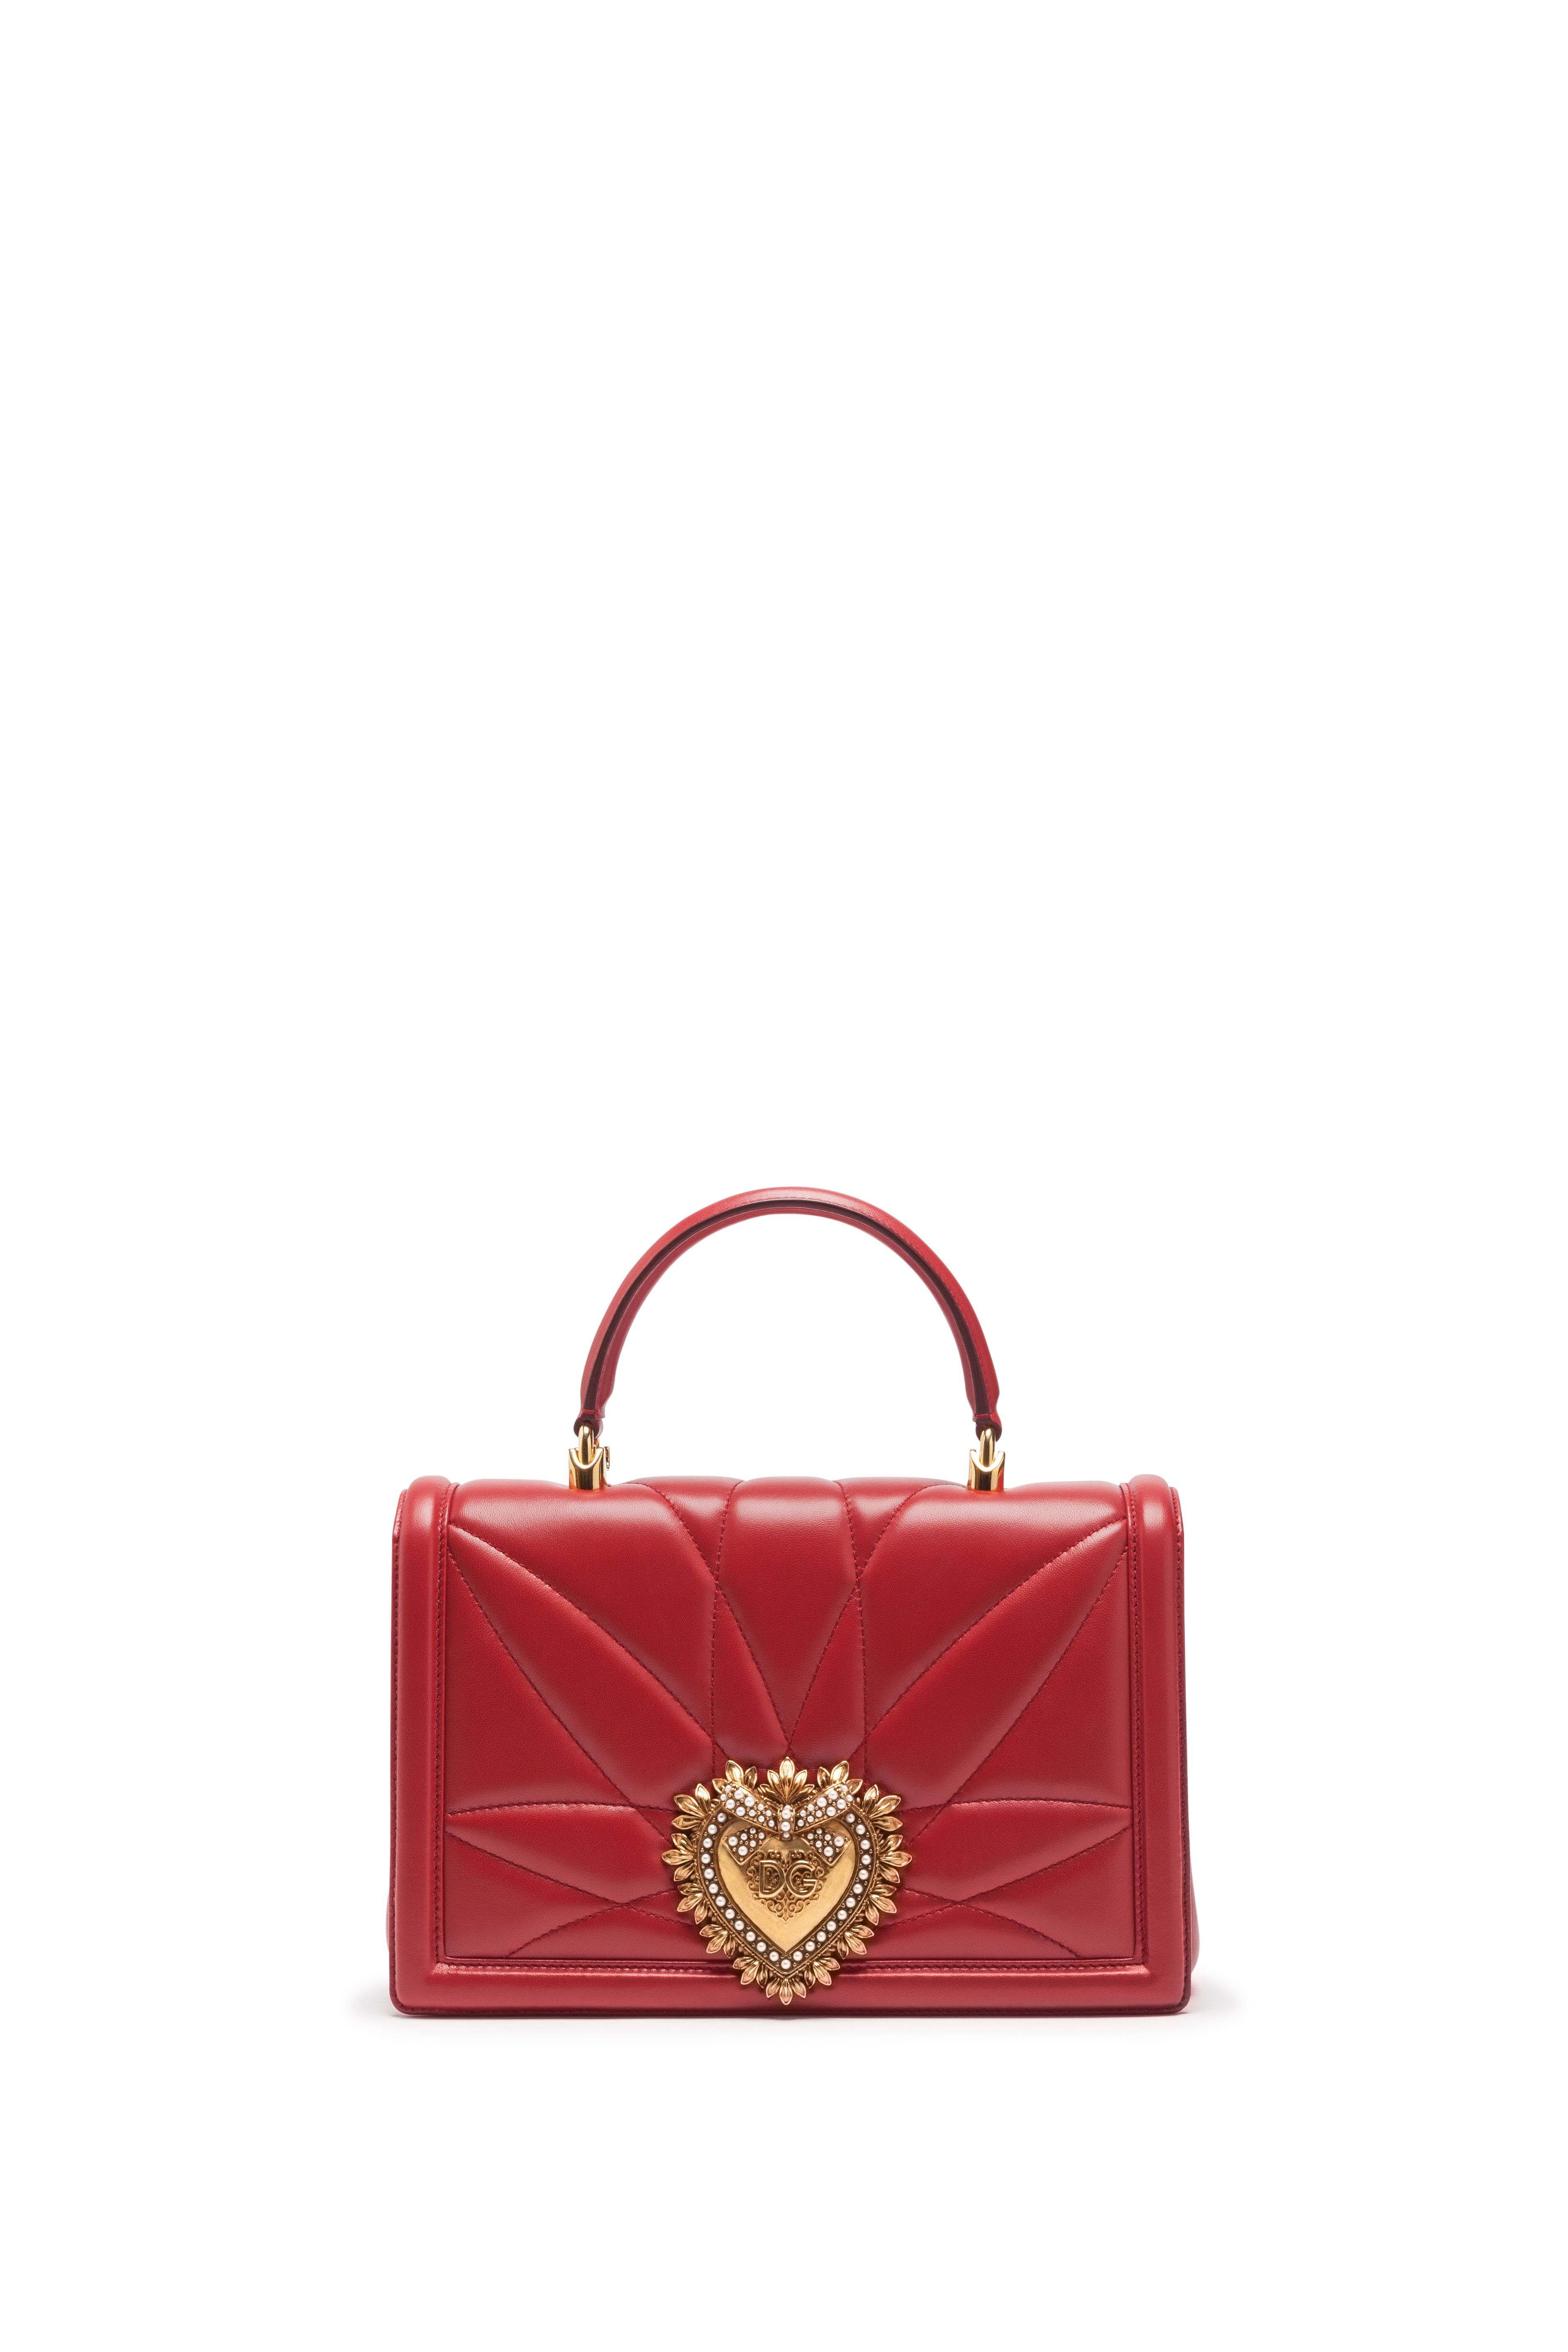 Dolce & Gabbana My Heart Bag in Red